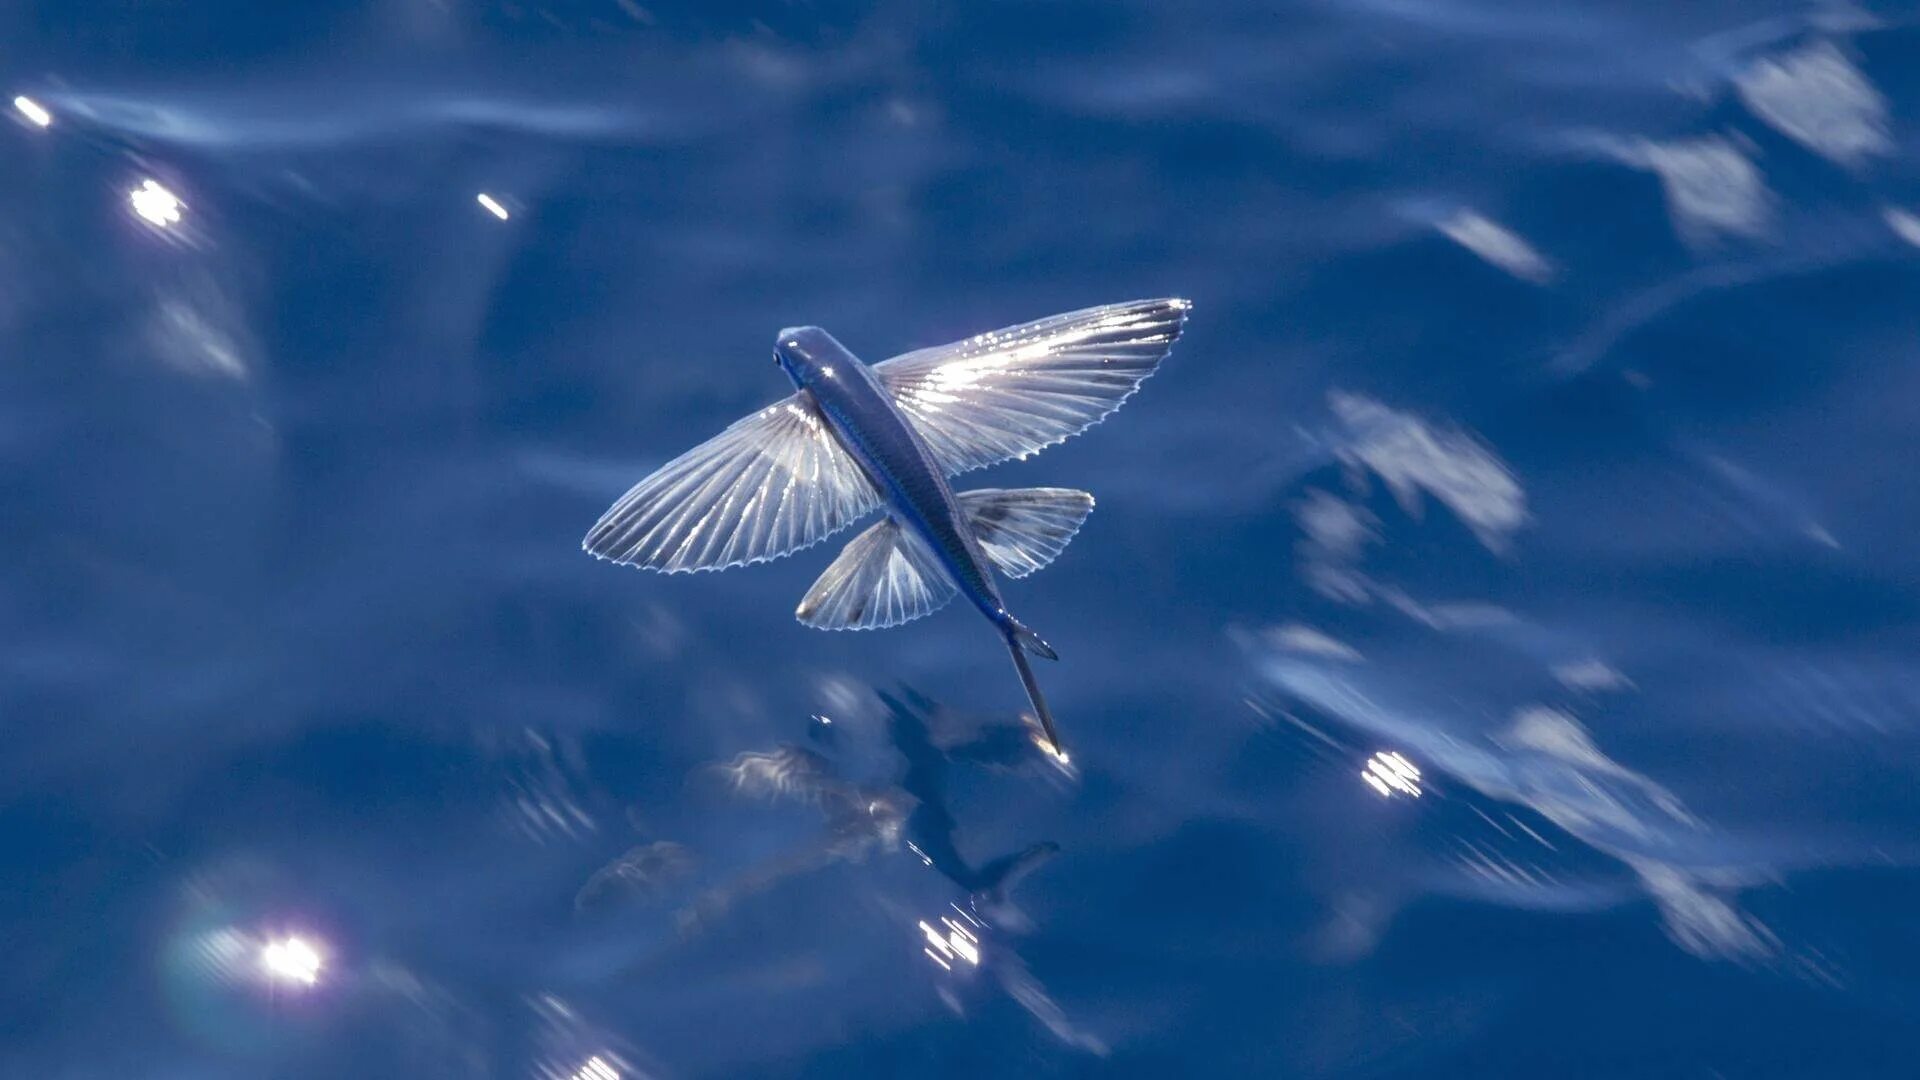 Четырехкрылая летучая рыба. Двукрылая летучая рыба. Летучая рыба биплан. Летучие рыбы Атлантического океана. Крылья летучей рыбы